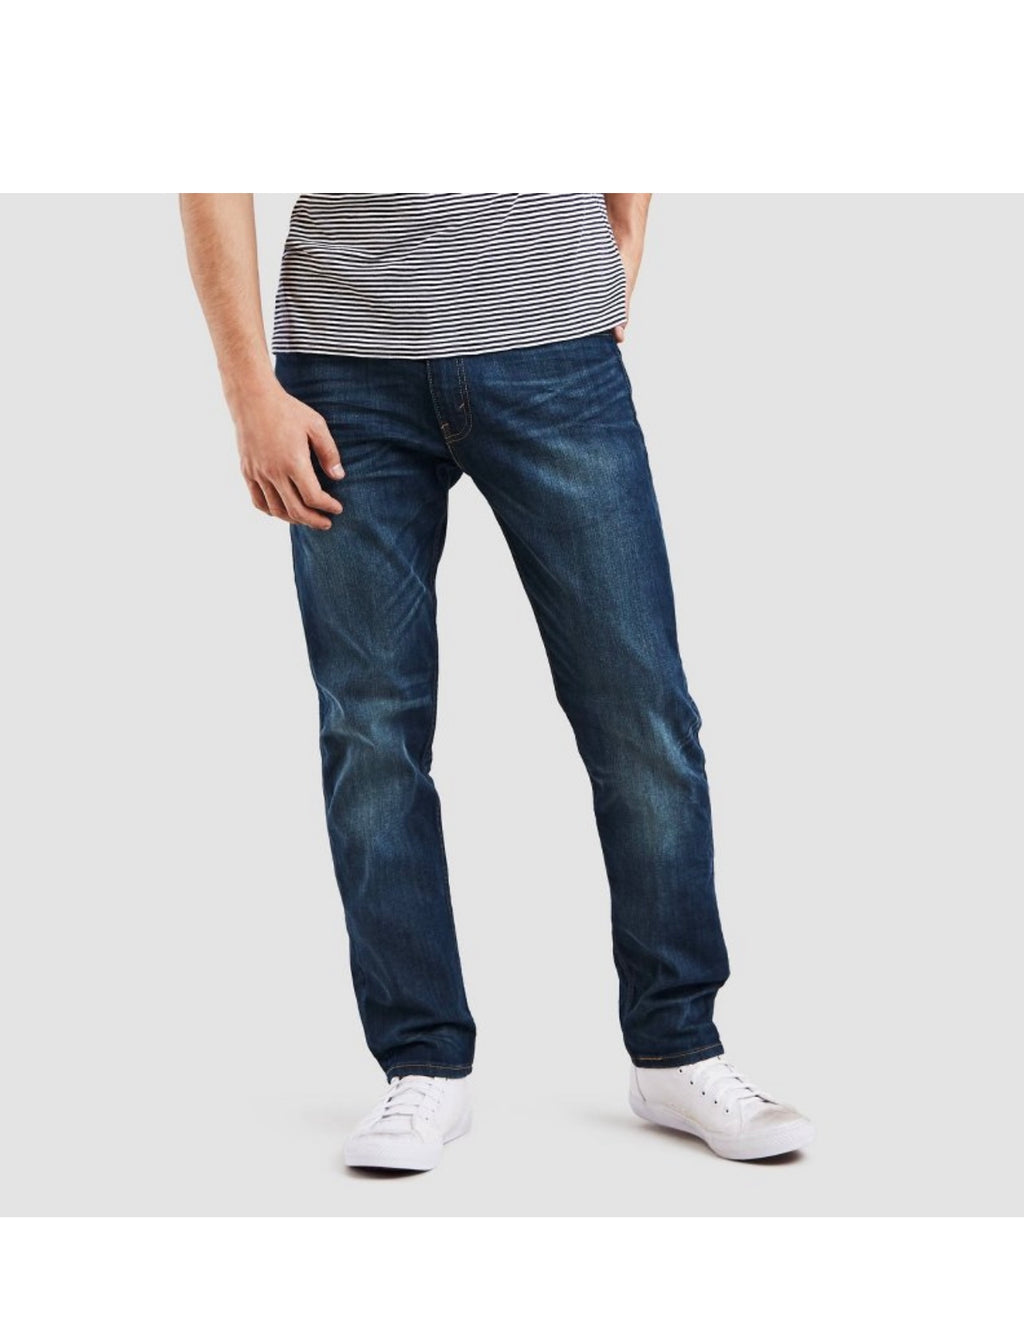 Levi's° Men's 502™ Taper Fit Jeans - Rosefinch 30x32